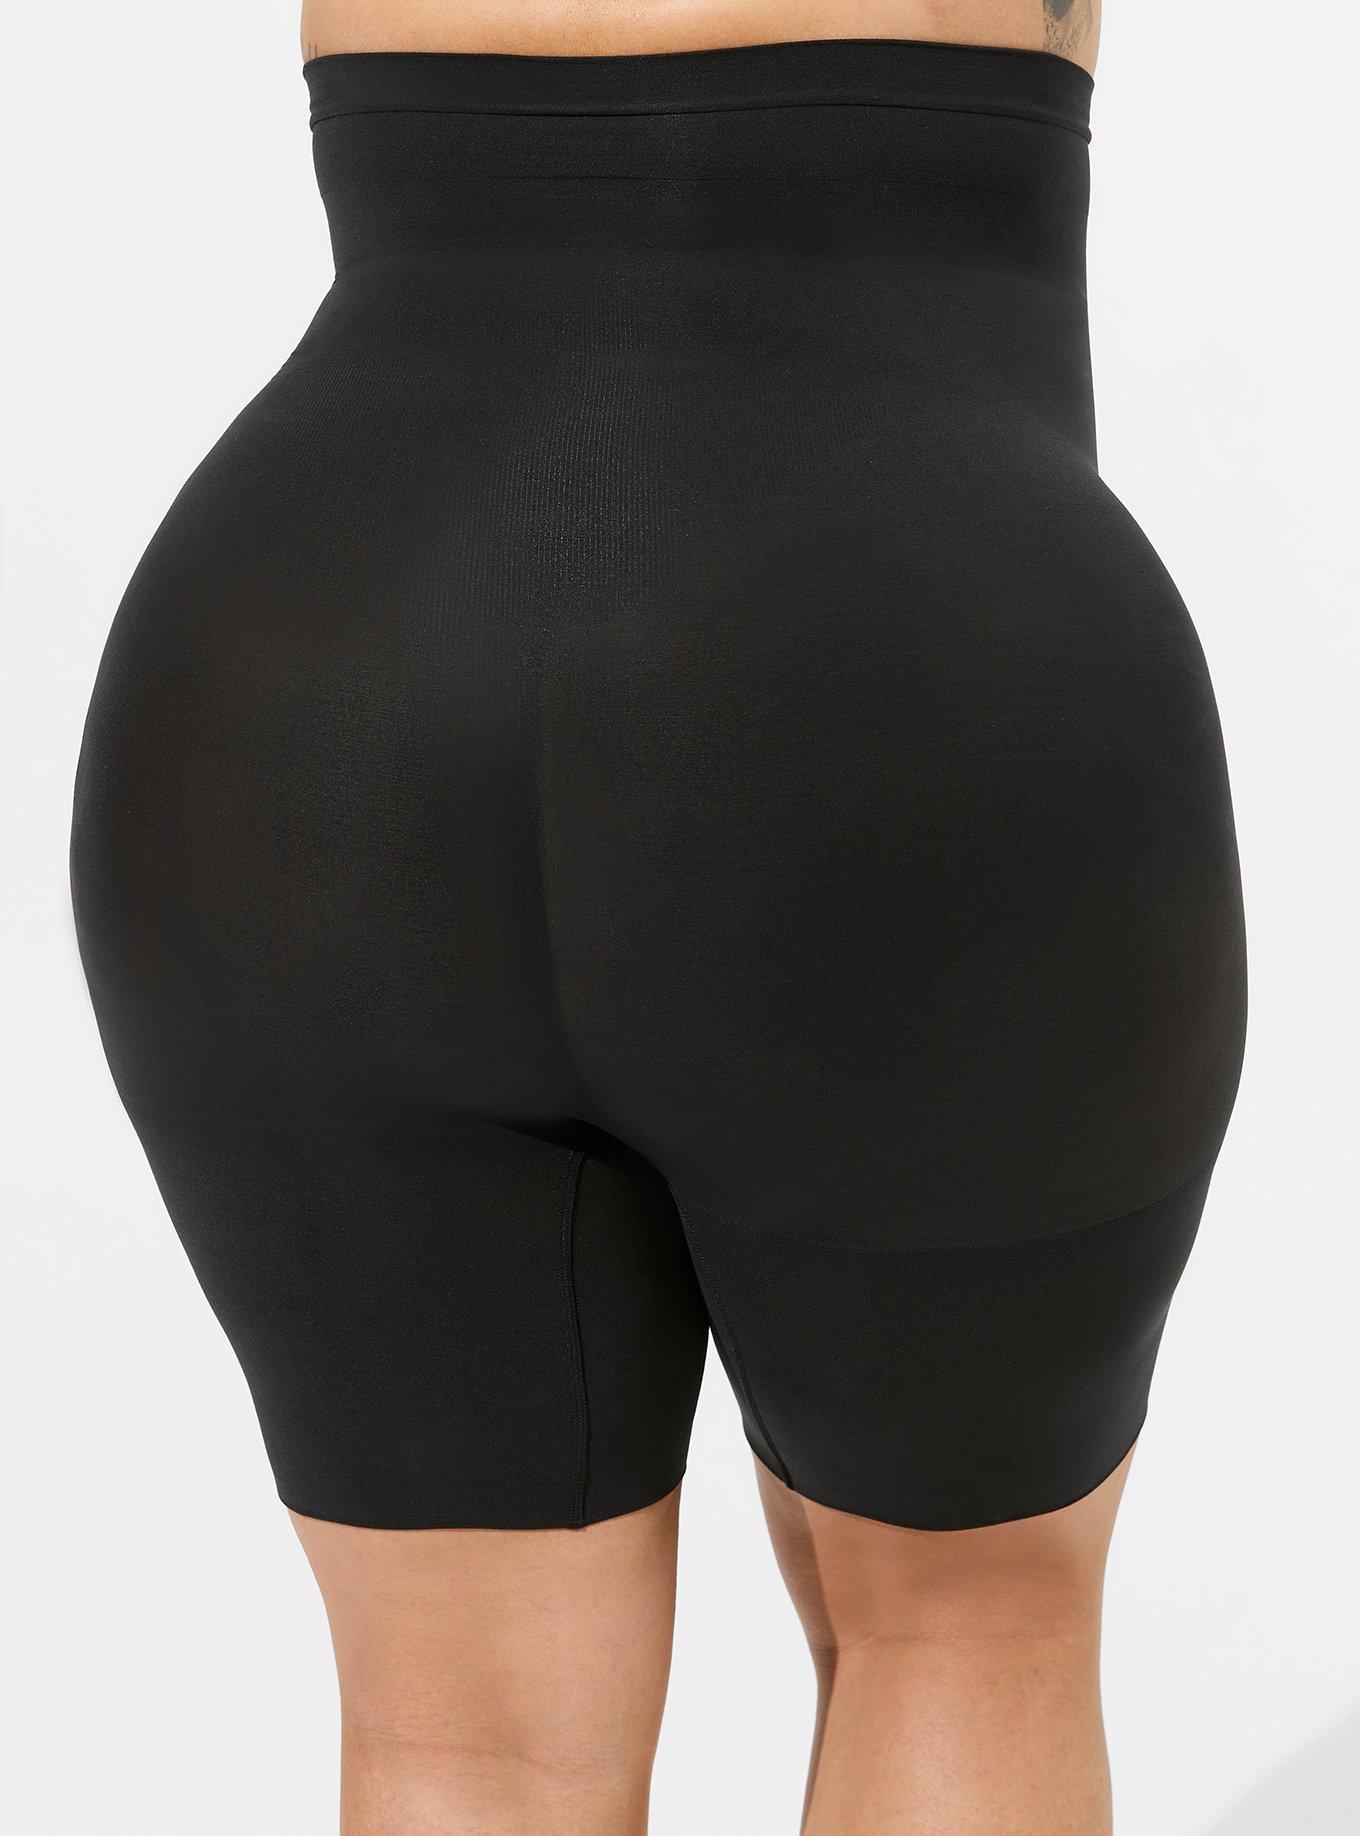 $118 Spanx Women's Black Solid High Waist Slimming Shorts Shapewear Size M